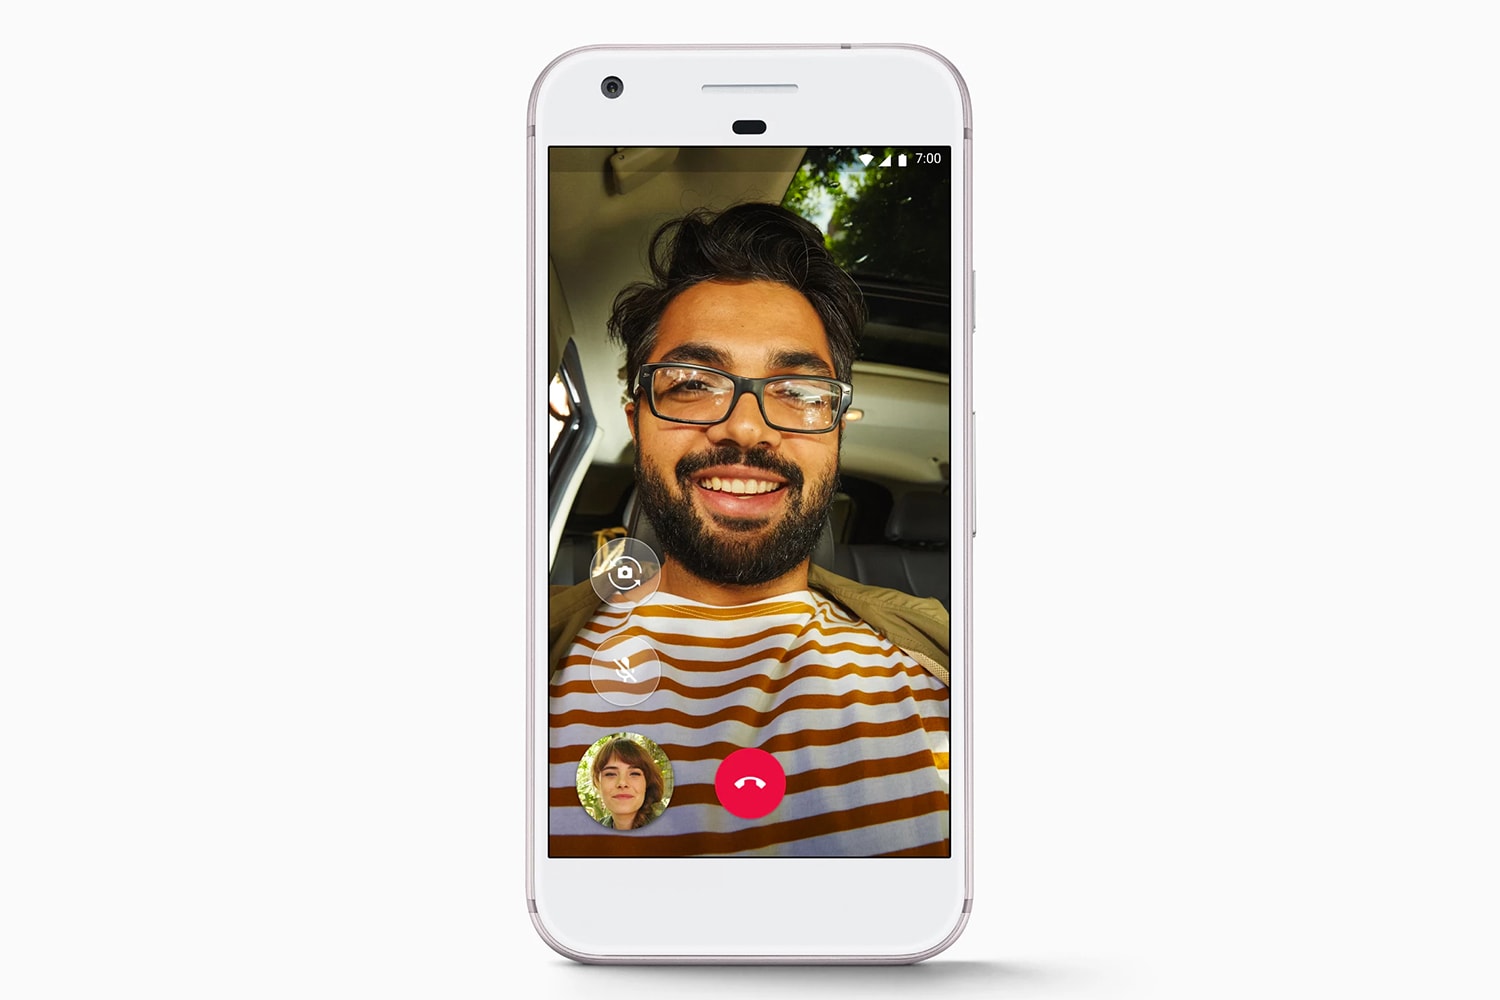 Google Pixel & Pixel XL Phones